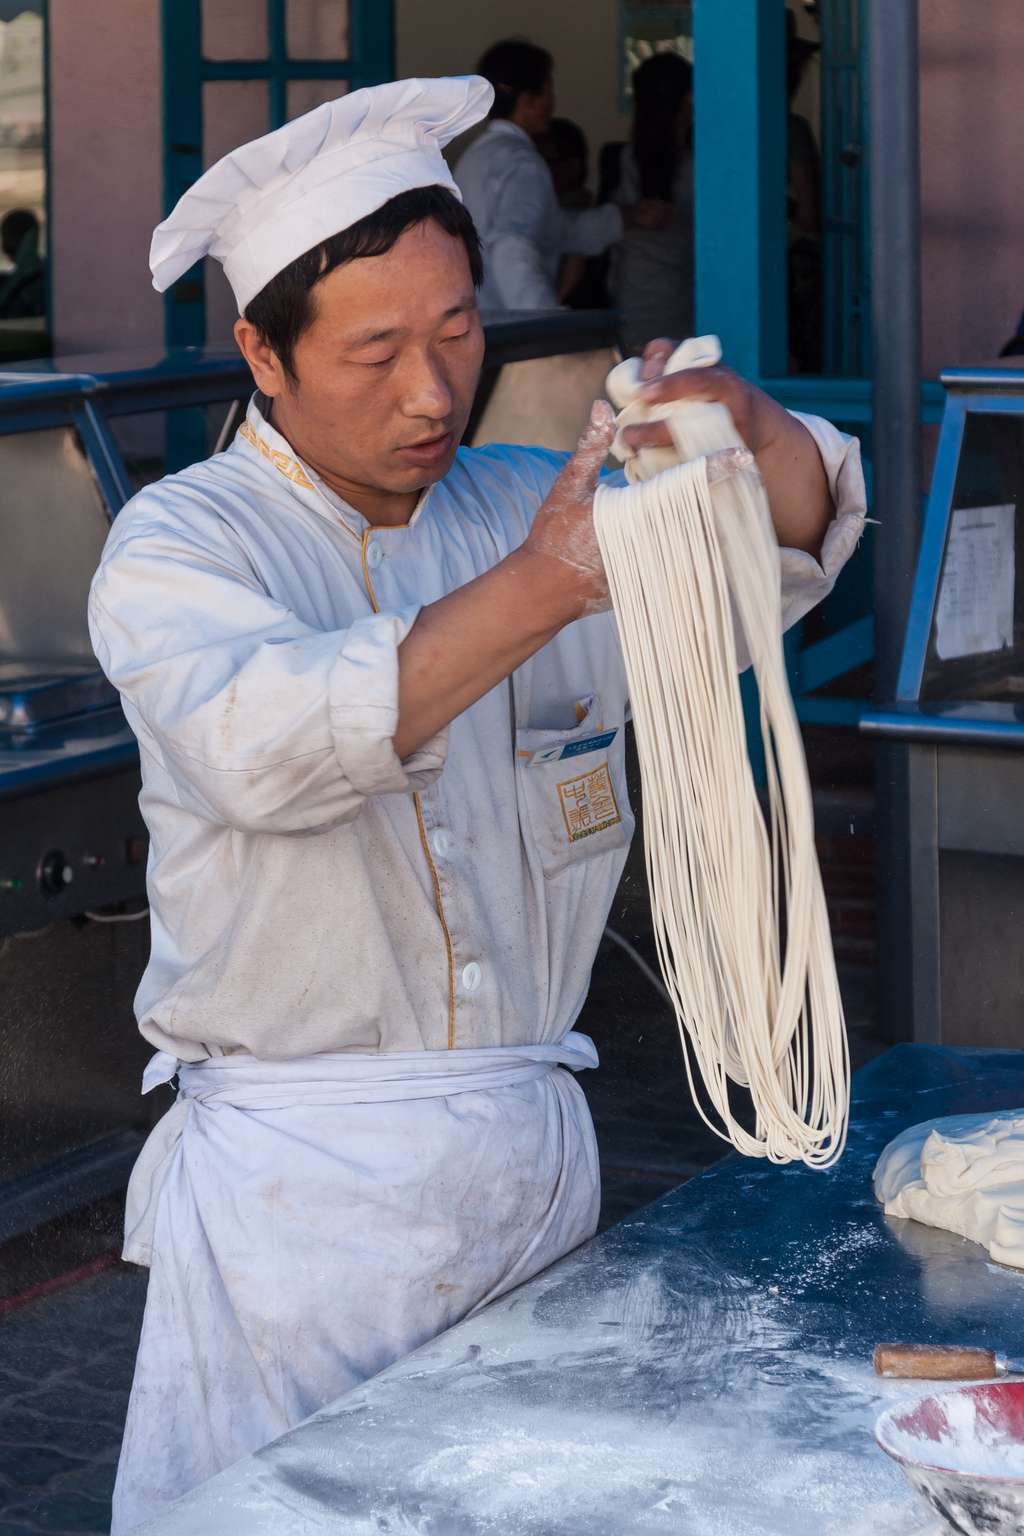 Fabricant chinois de pâtes artisanales ; Dalian Laohutan Ocean Park, Chine, 2009. © CEphoto, Uwe Aranas.